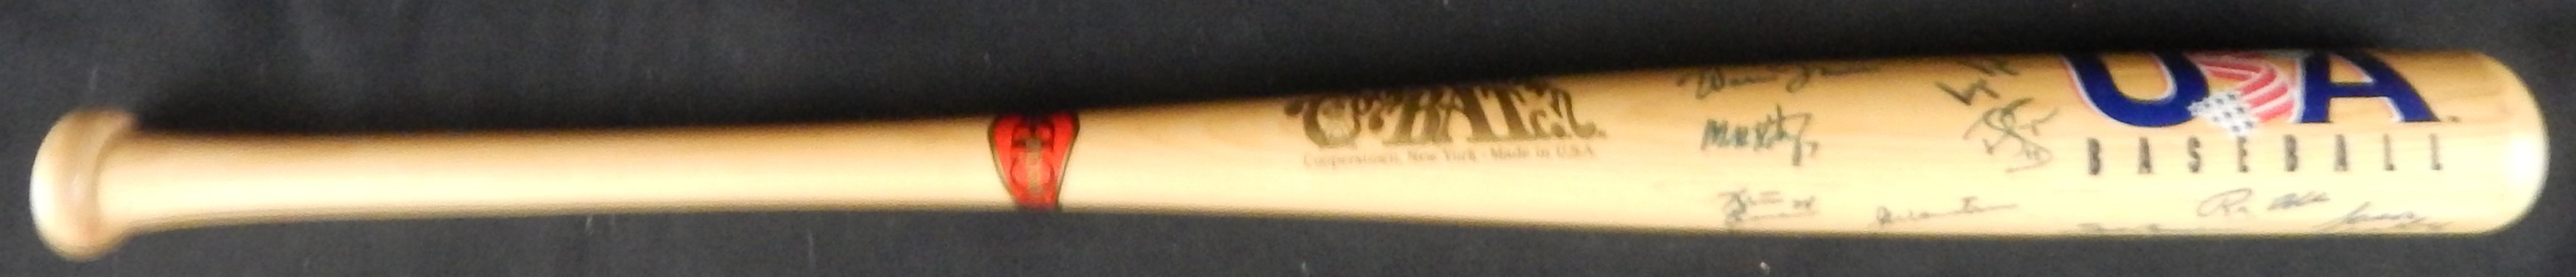 Baseball Autographs - 1996 Olympic Team USA Signed Bat